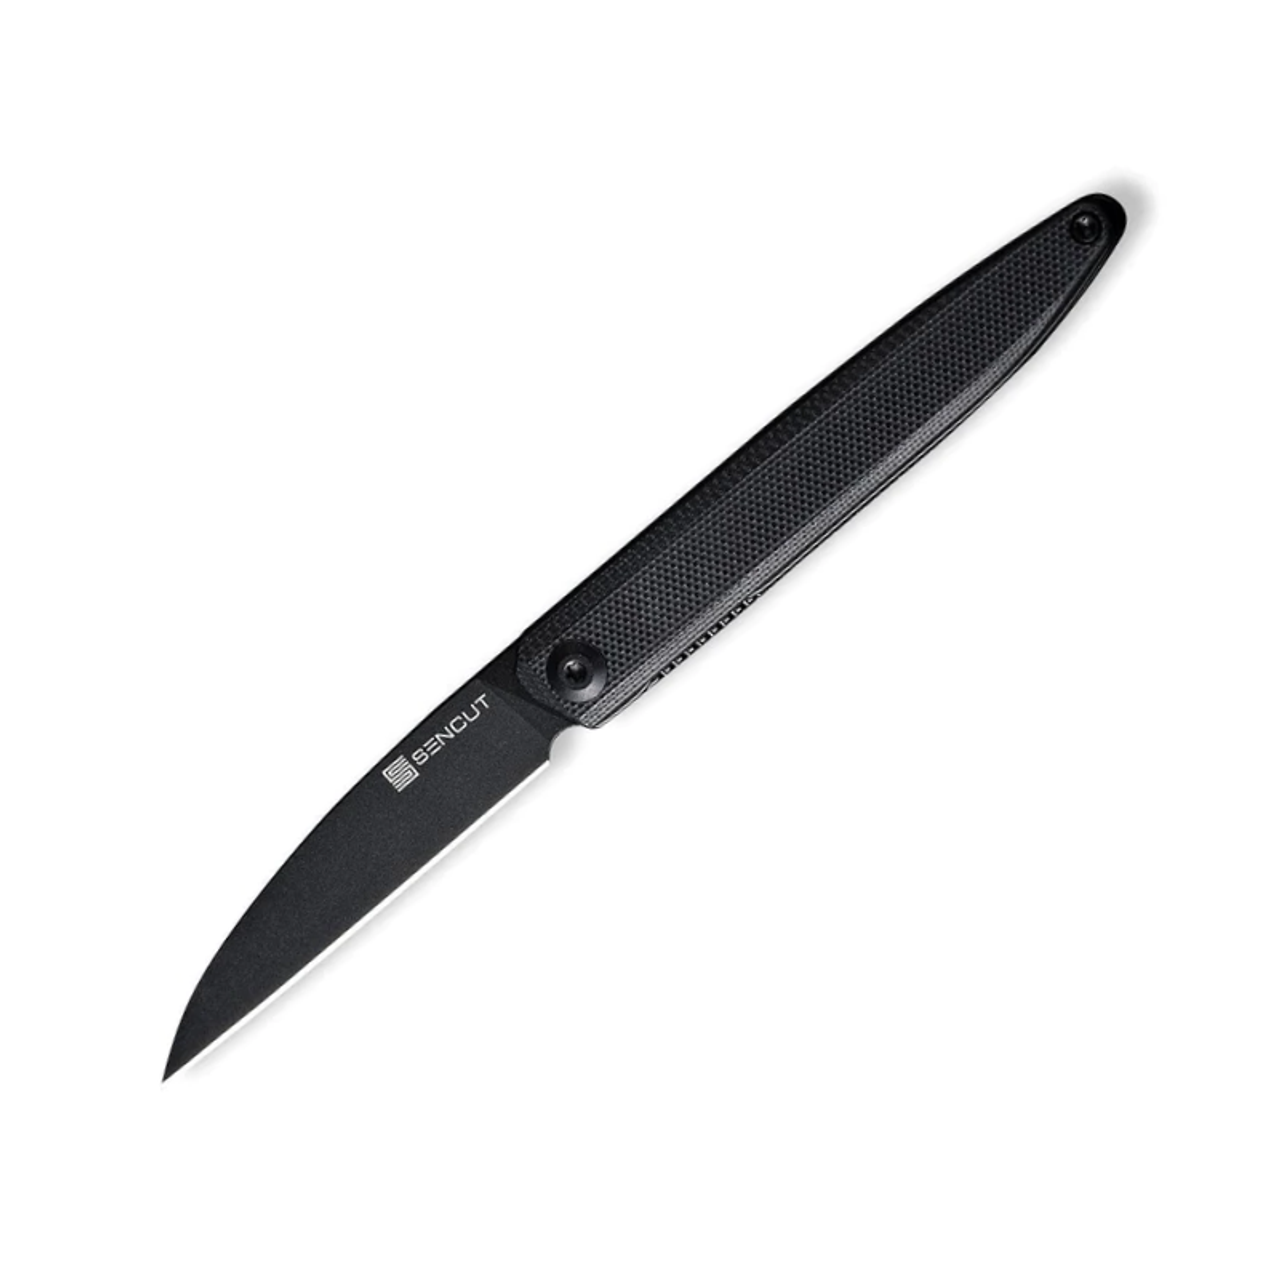 Sencut Jubil Front Flipper (S200292) 2.95" D2 Black Wharncliffe Plain Blade, Black G-10 Handle